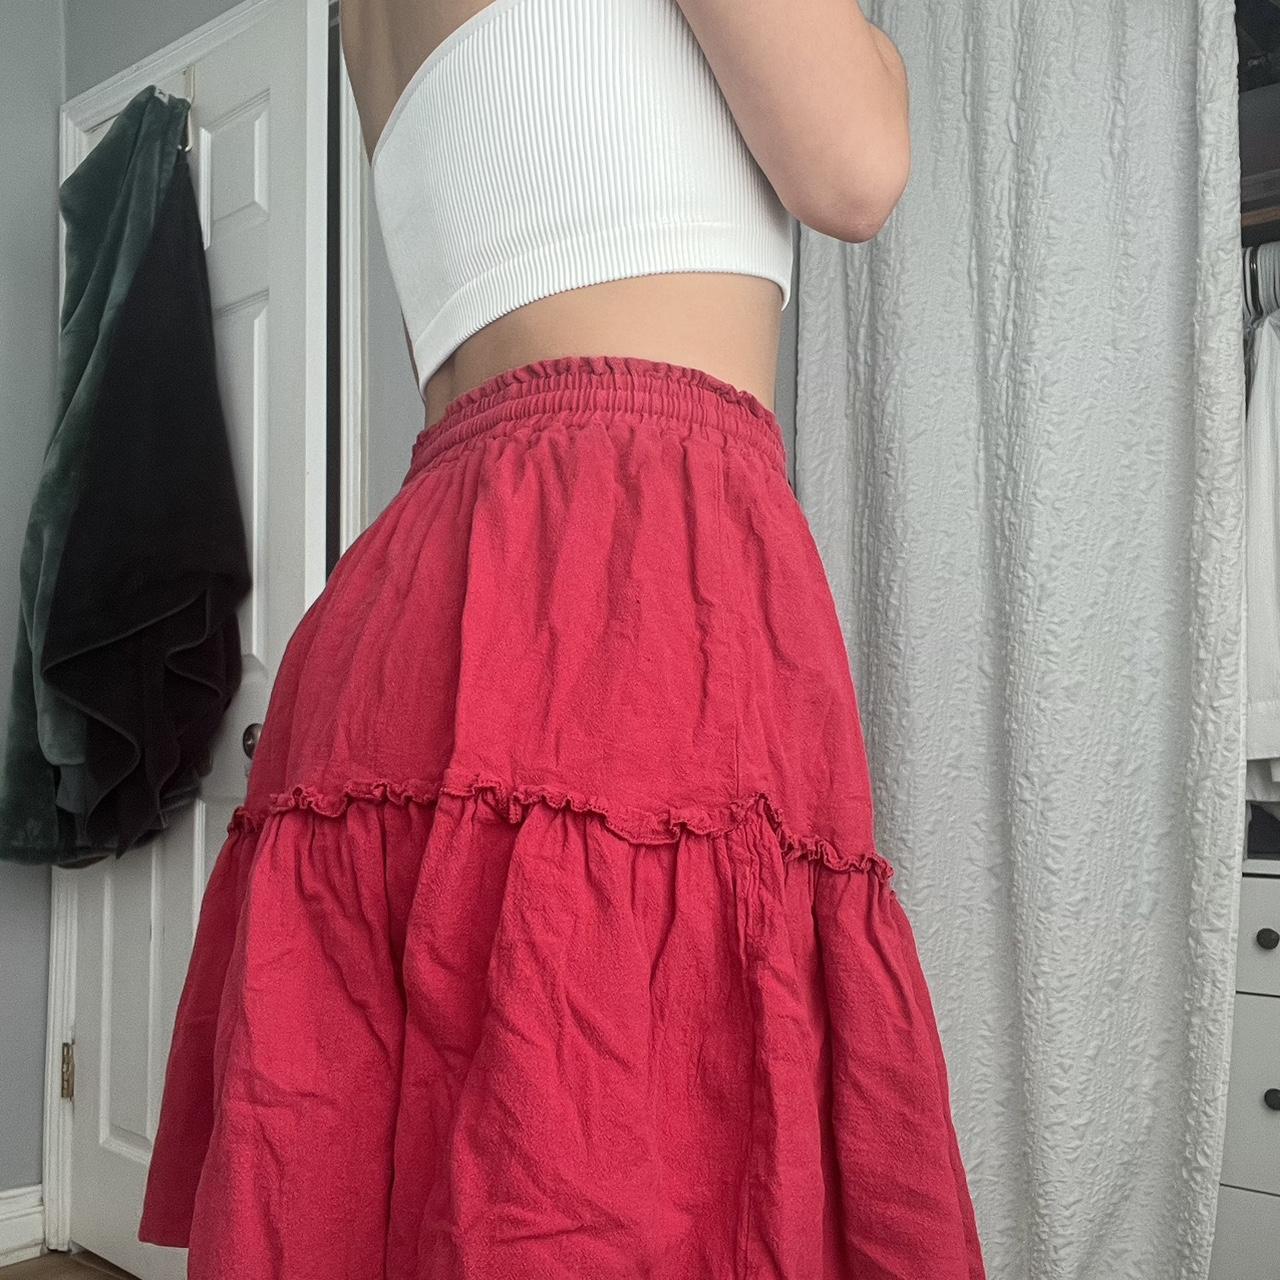 American Apparel Women's Red Skirt (4)